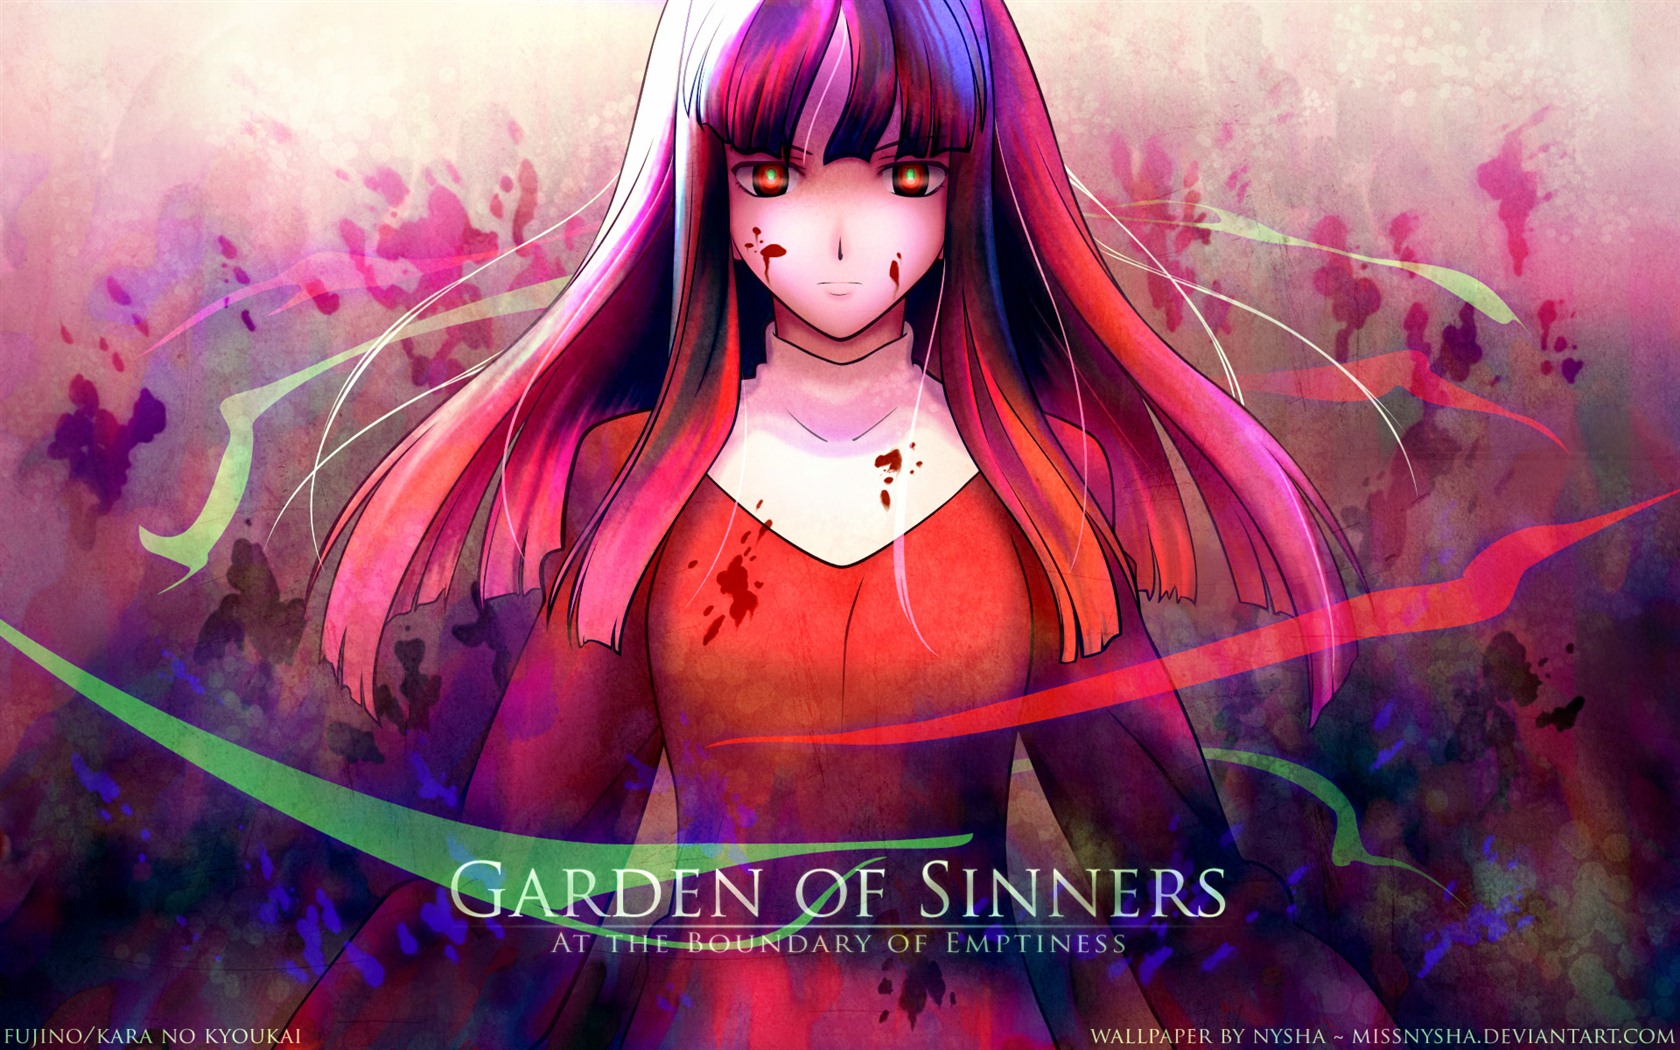 the Garden of sinners HD wallpapers #1 - 1680x1050